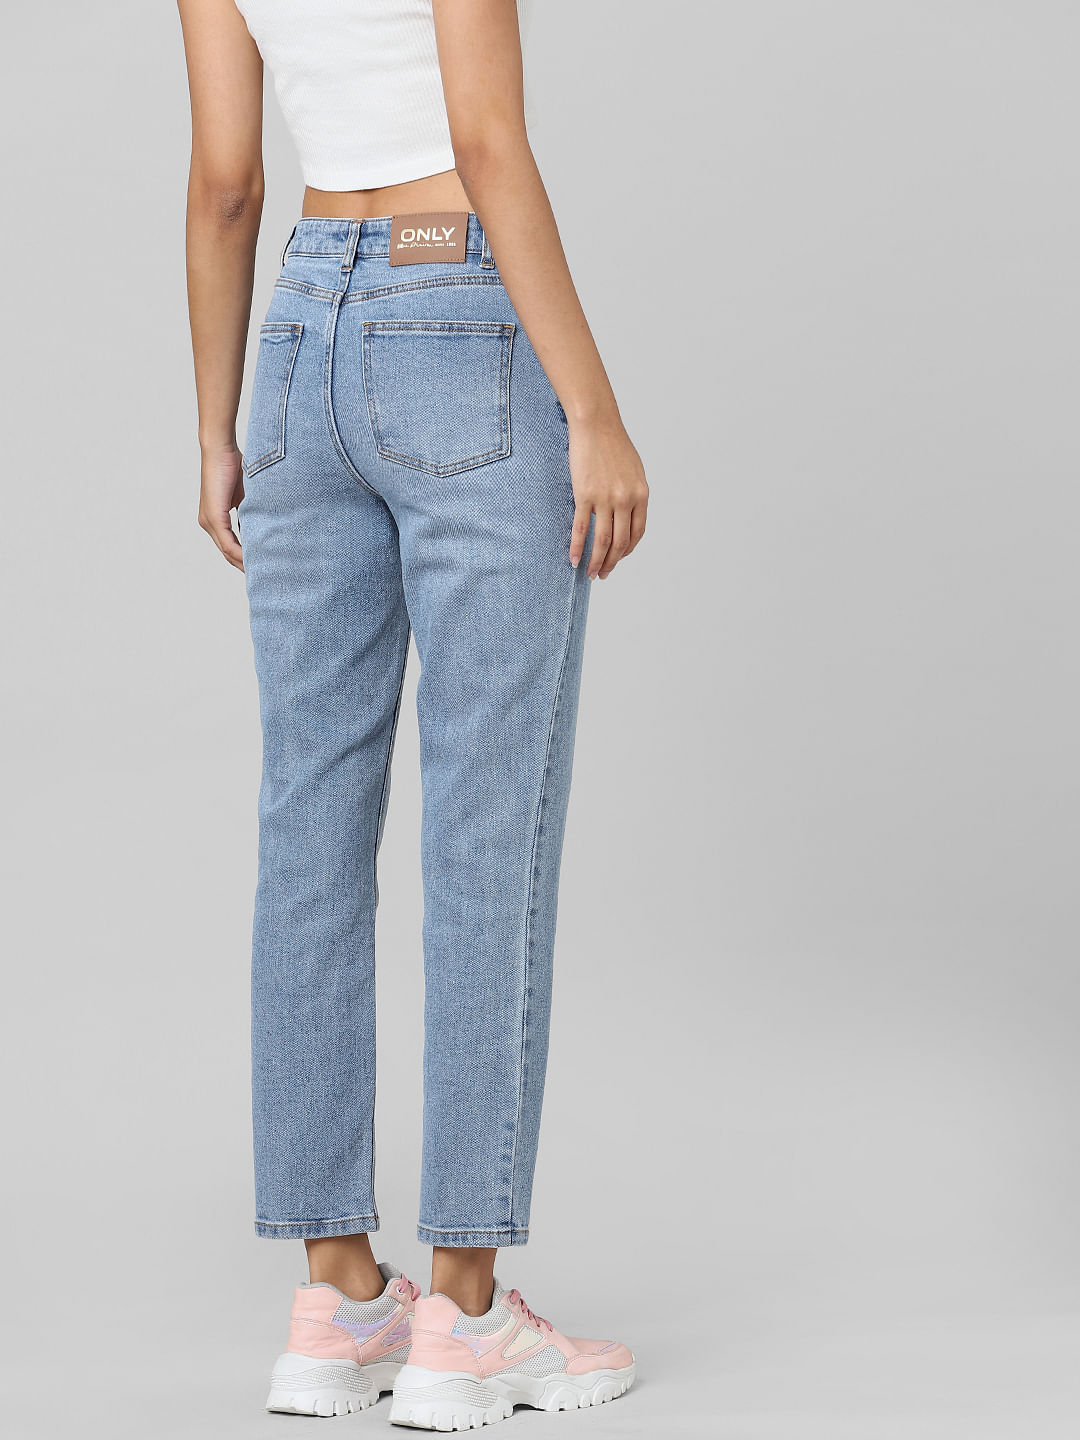 New Express Jeans Culottes High Rise Women's Size 4 Raw Hem Wide Leg Denim  Blue | eBay